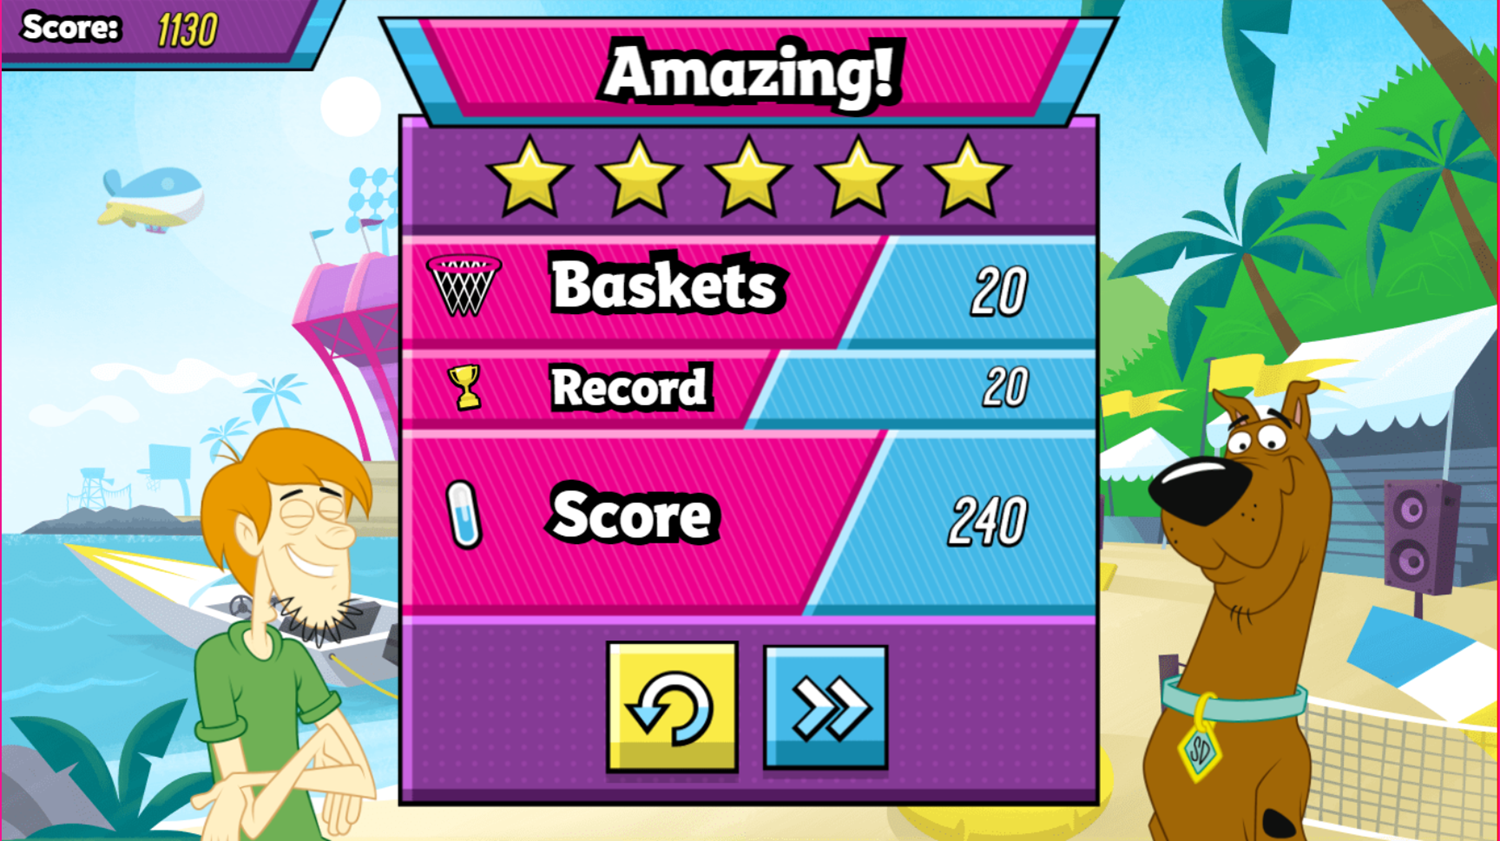 Boomerang All Stars Basket Zorb Game Score Screenshot.